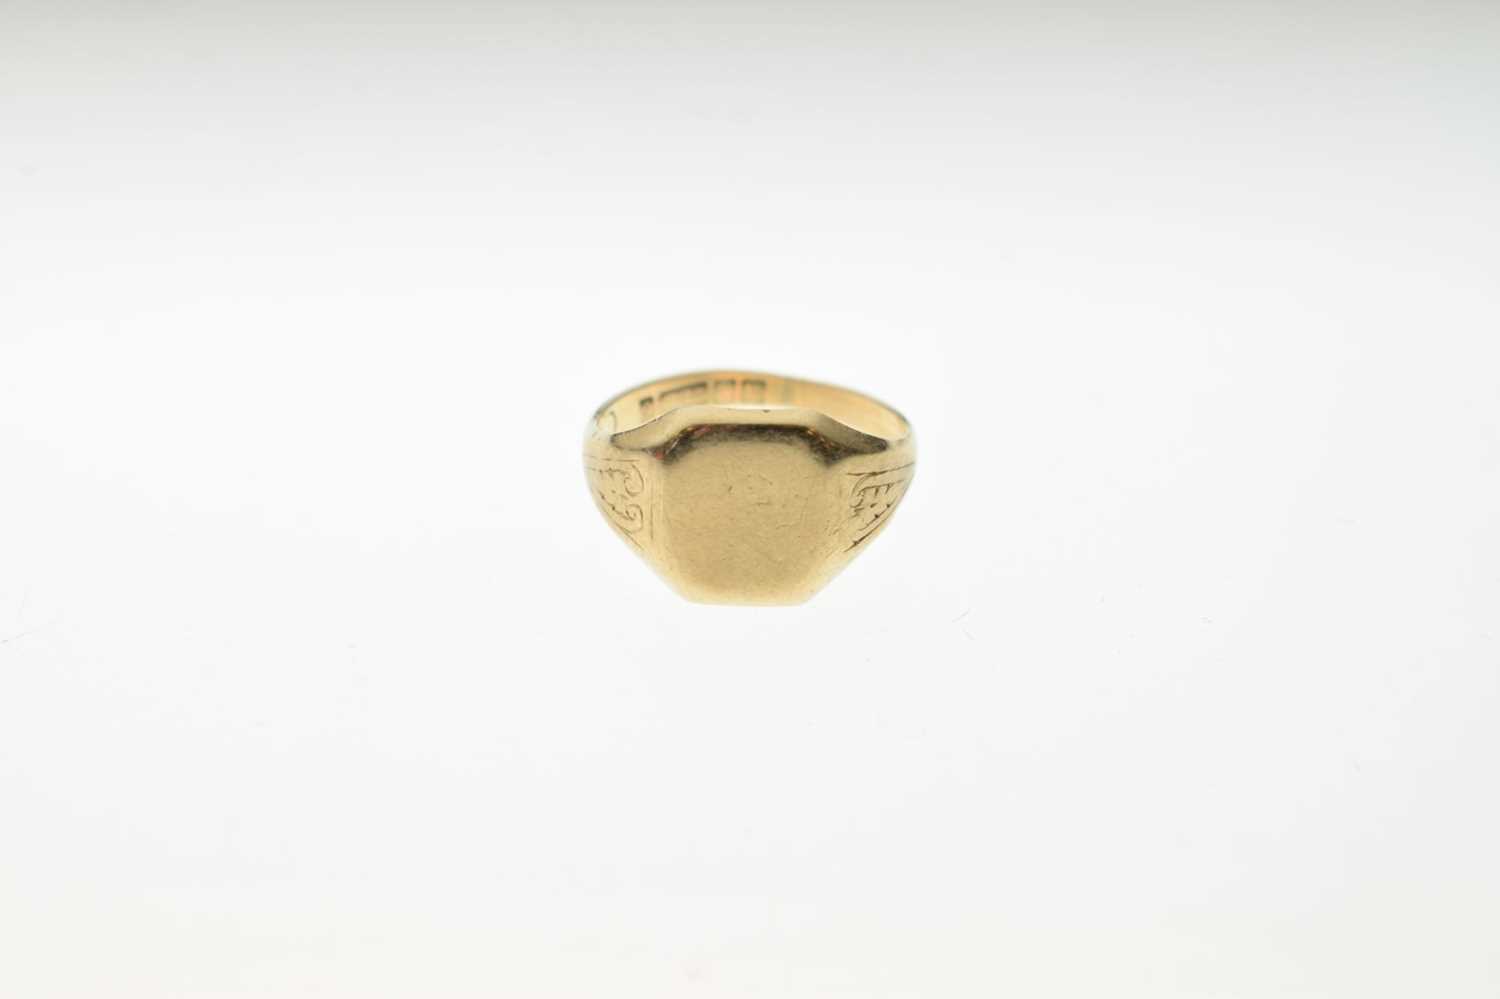 9ct gold signet ring - Image 6 of 6